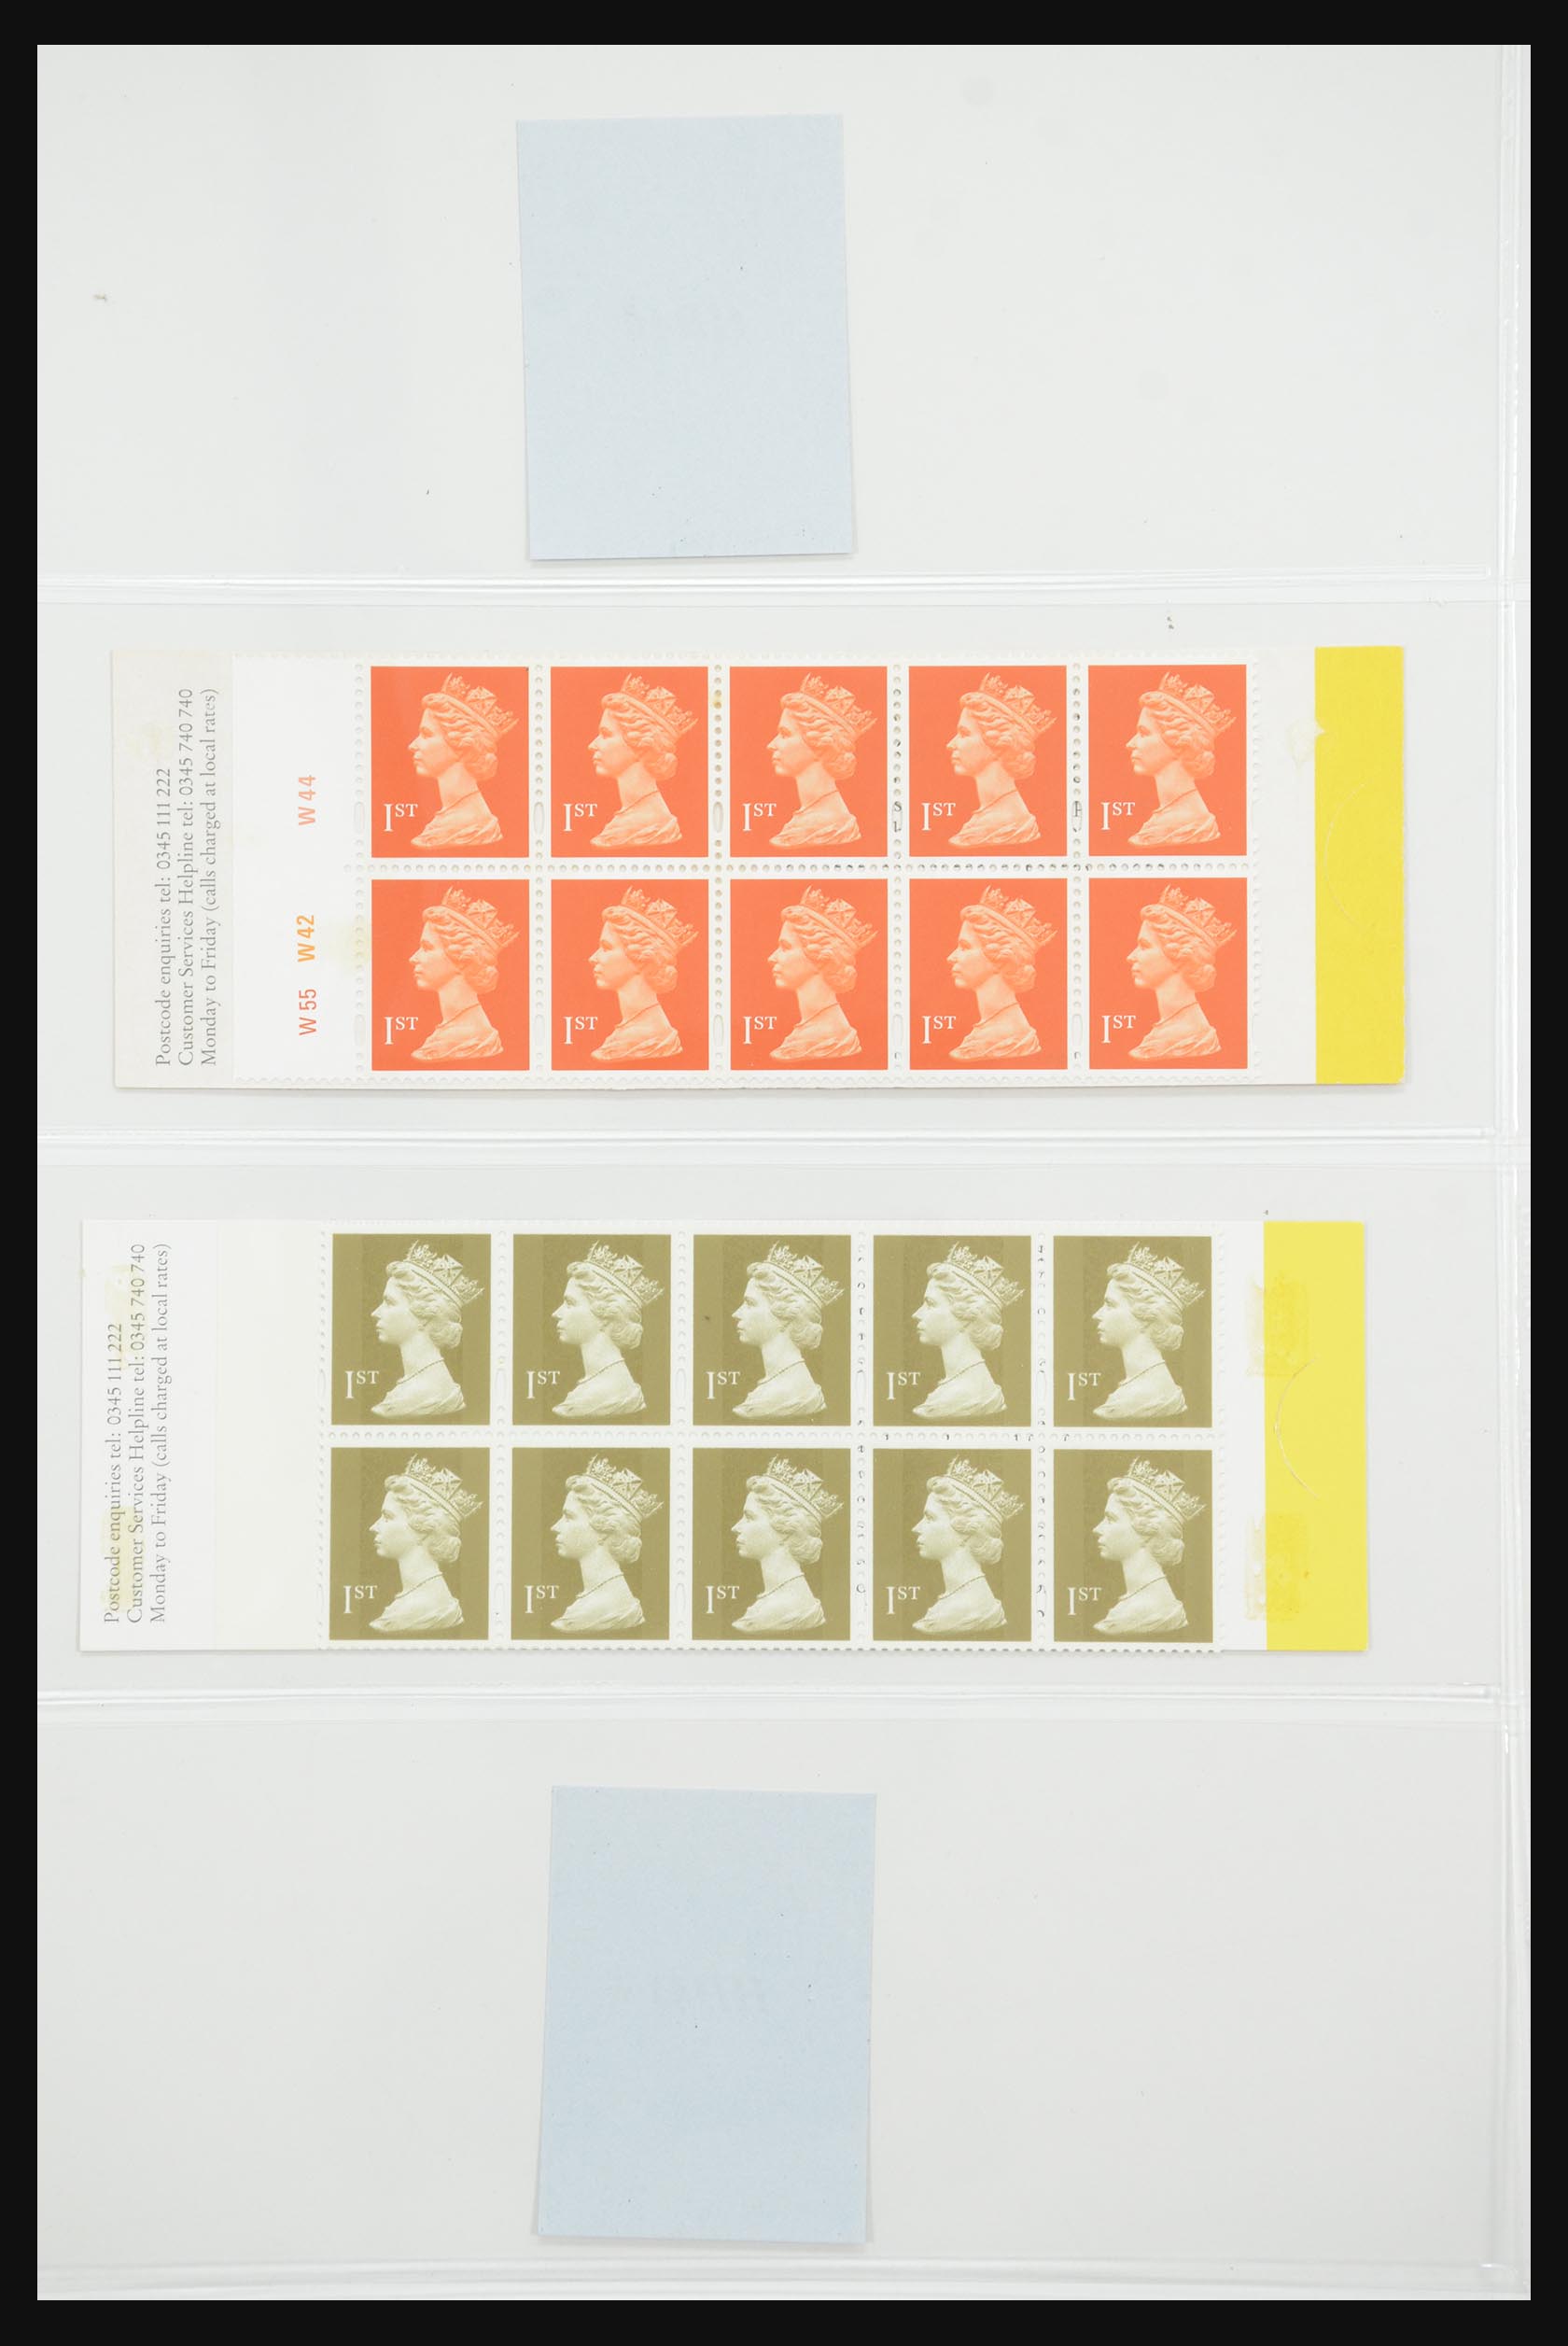 31960 160 - 31960 Great Britain stampbooklets 1989-2000.